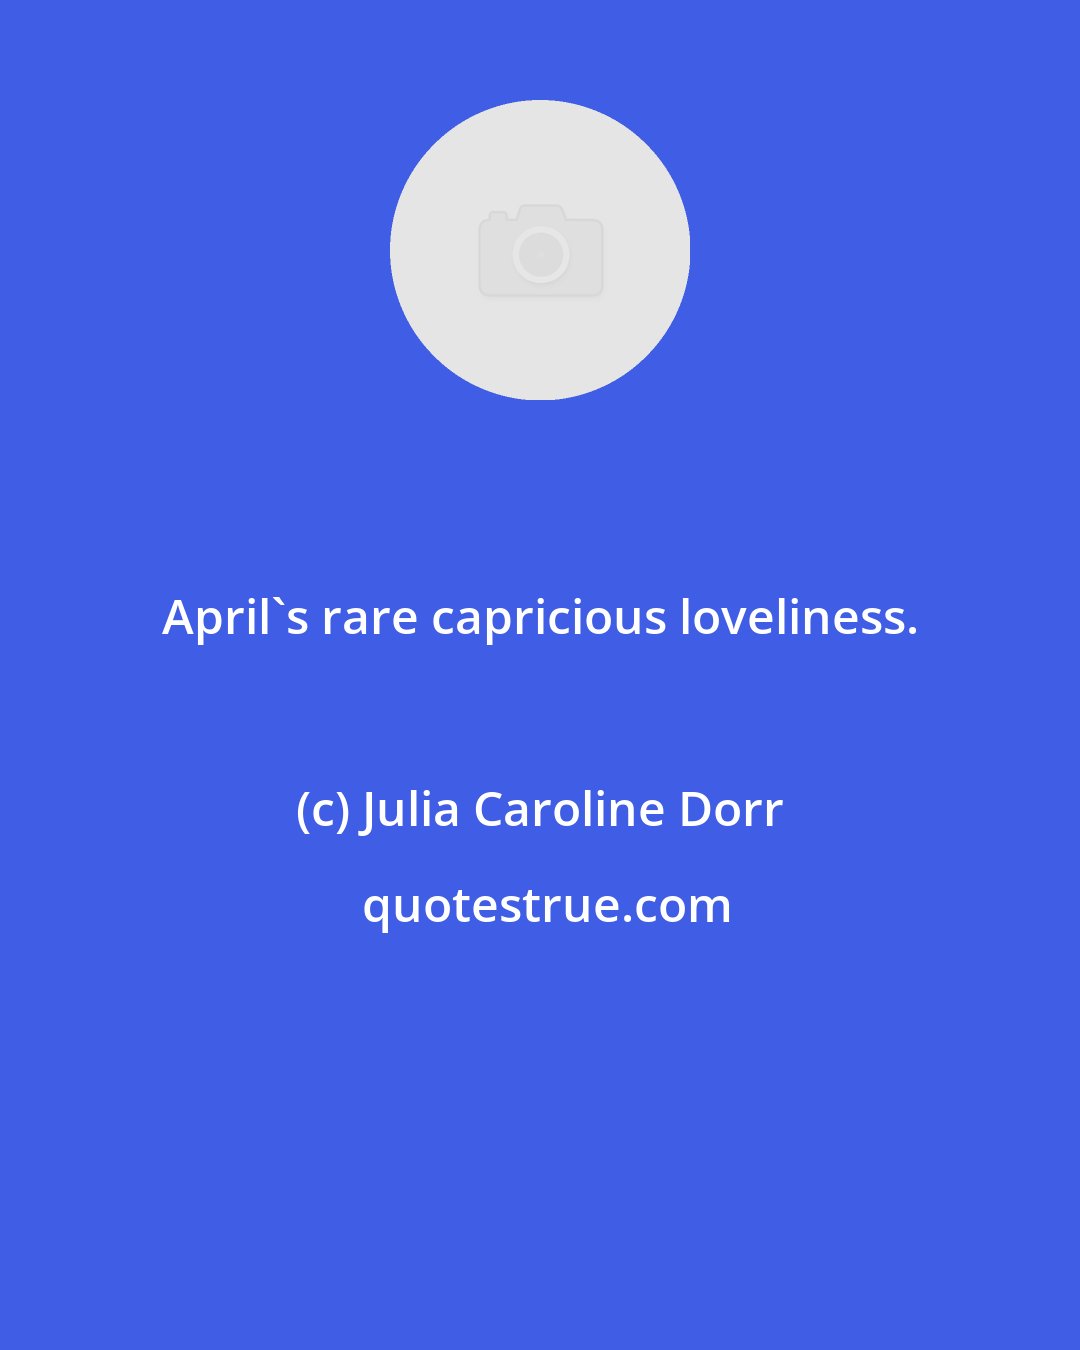 Julia Caroline Dorr: April's rare capricious loveliness.